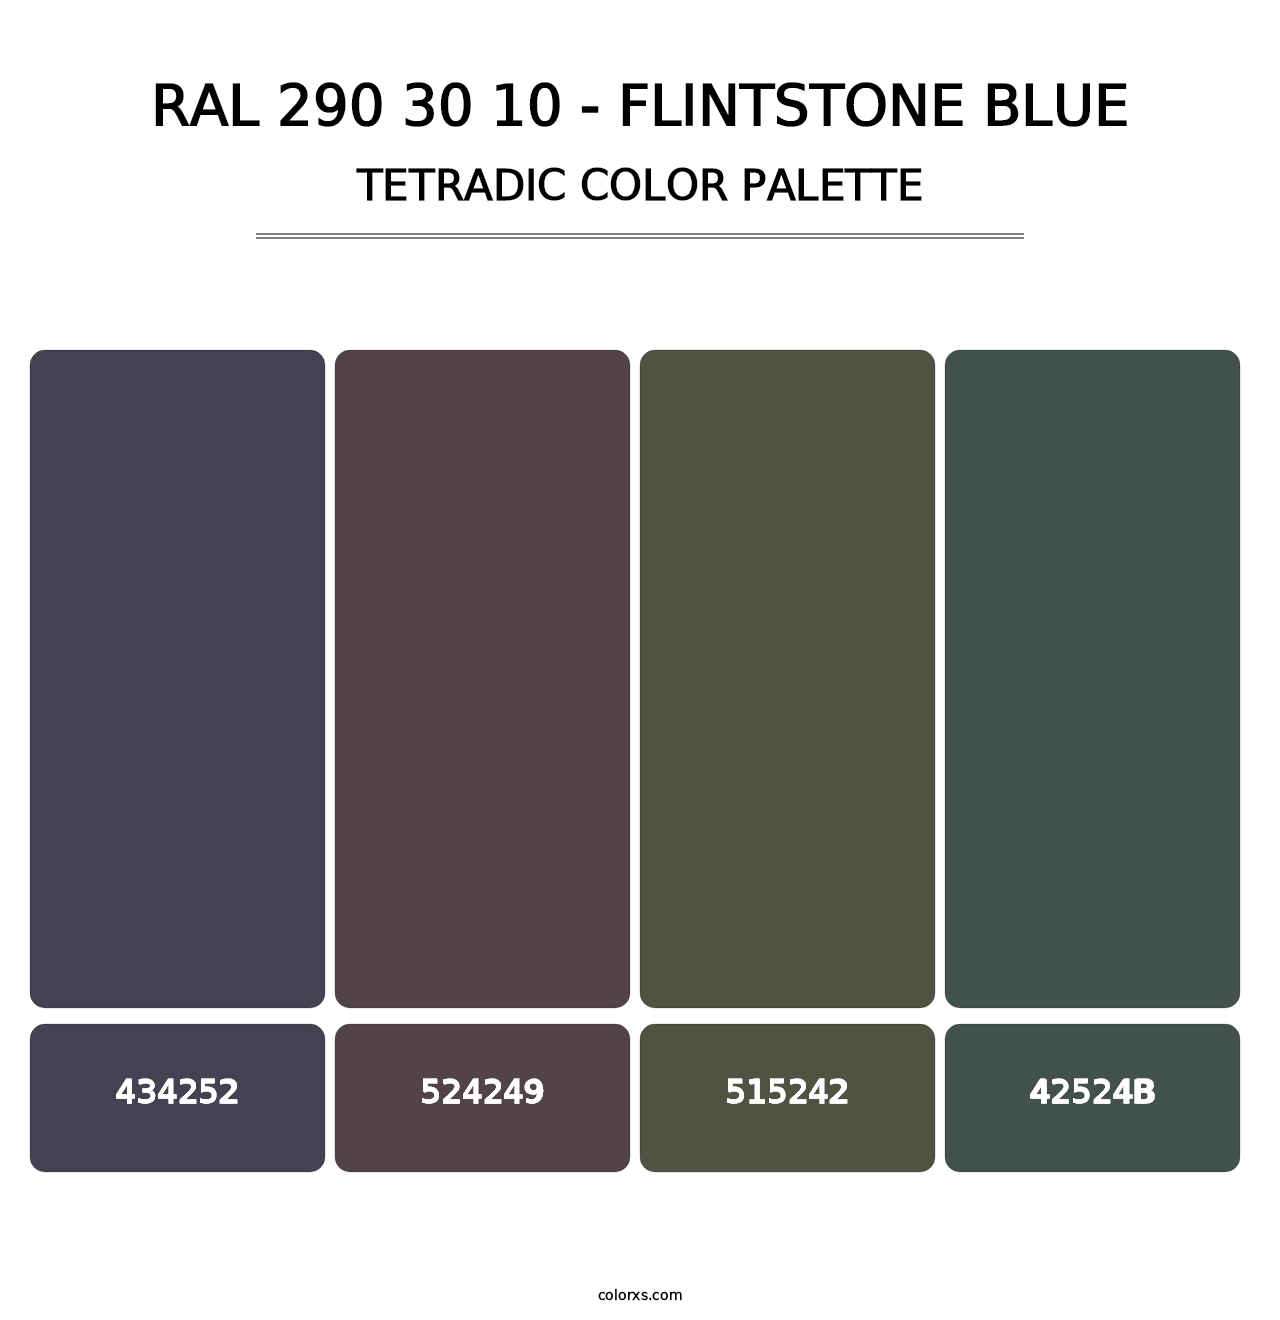 RAL 290 30 10 - Flintstone Blue - Tetradic Color Palette